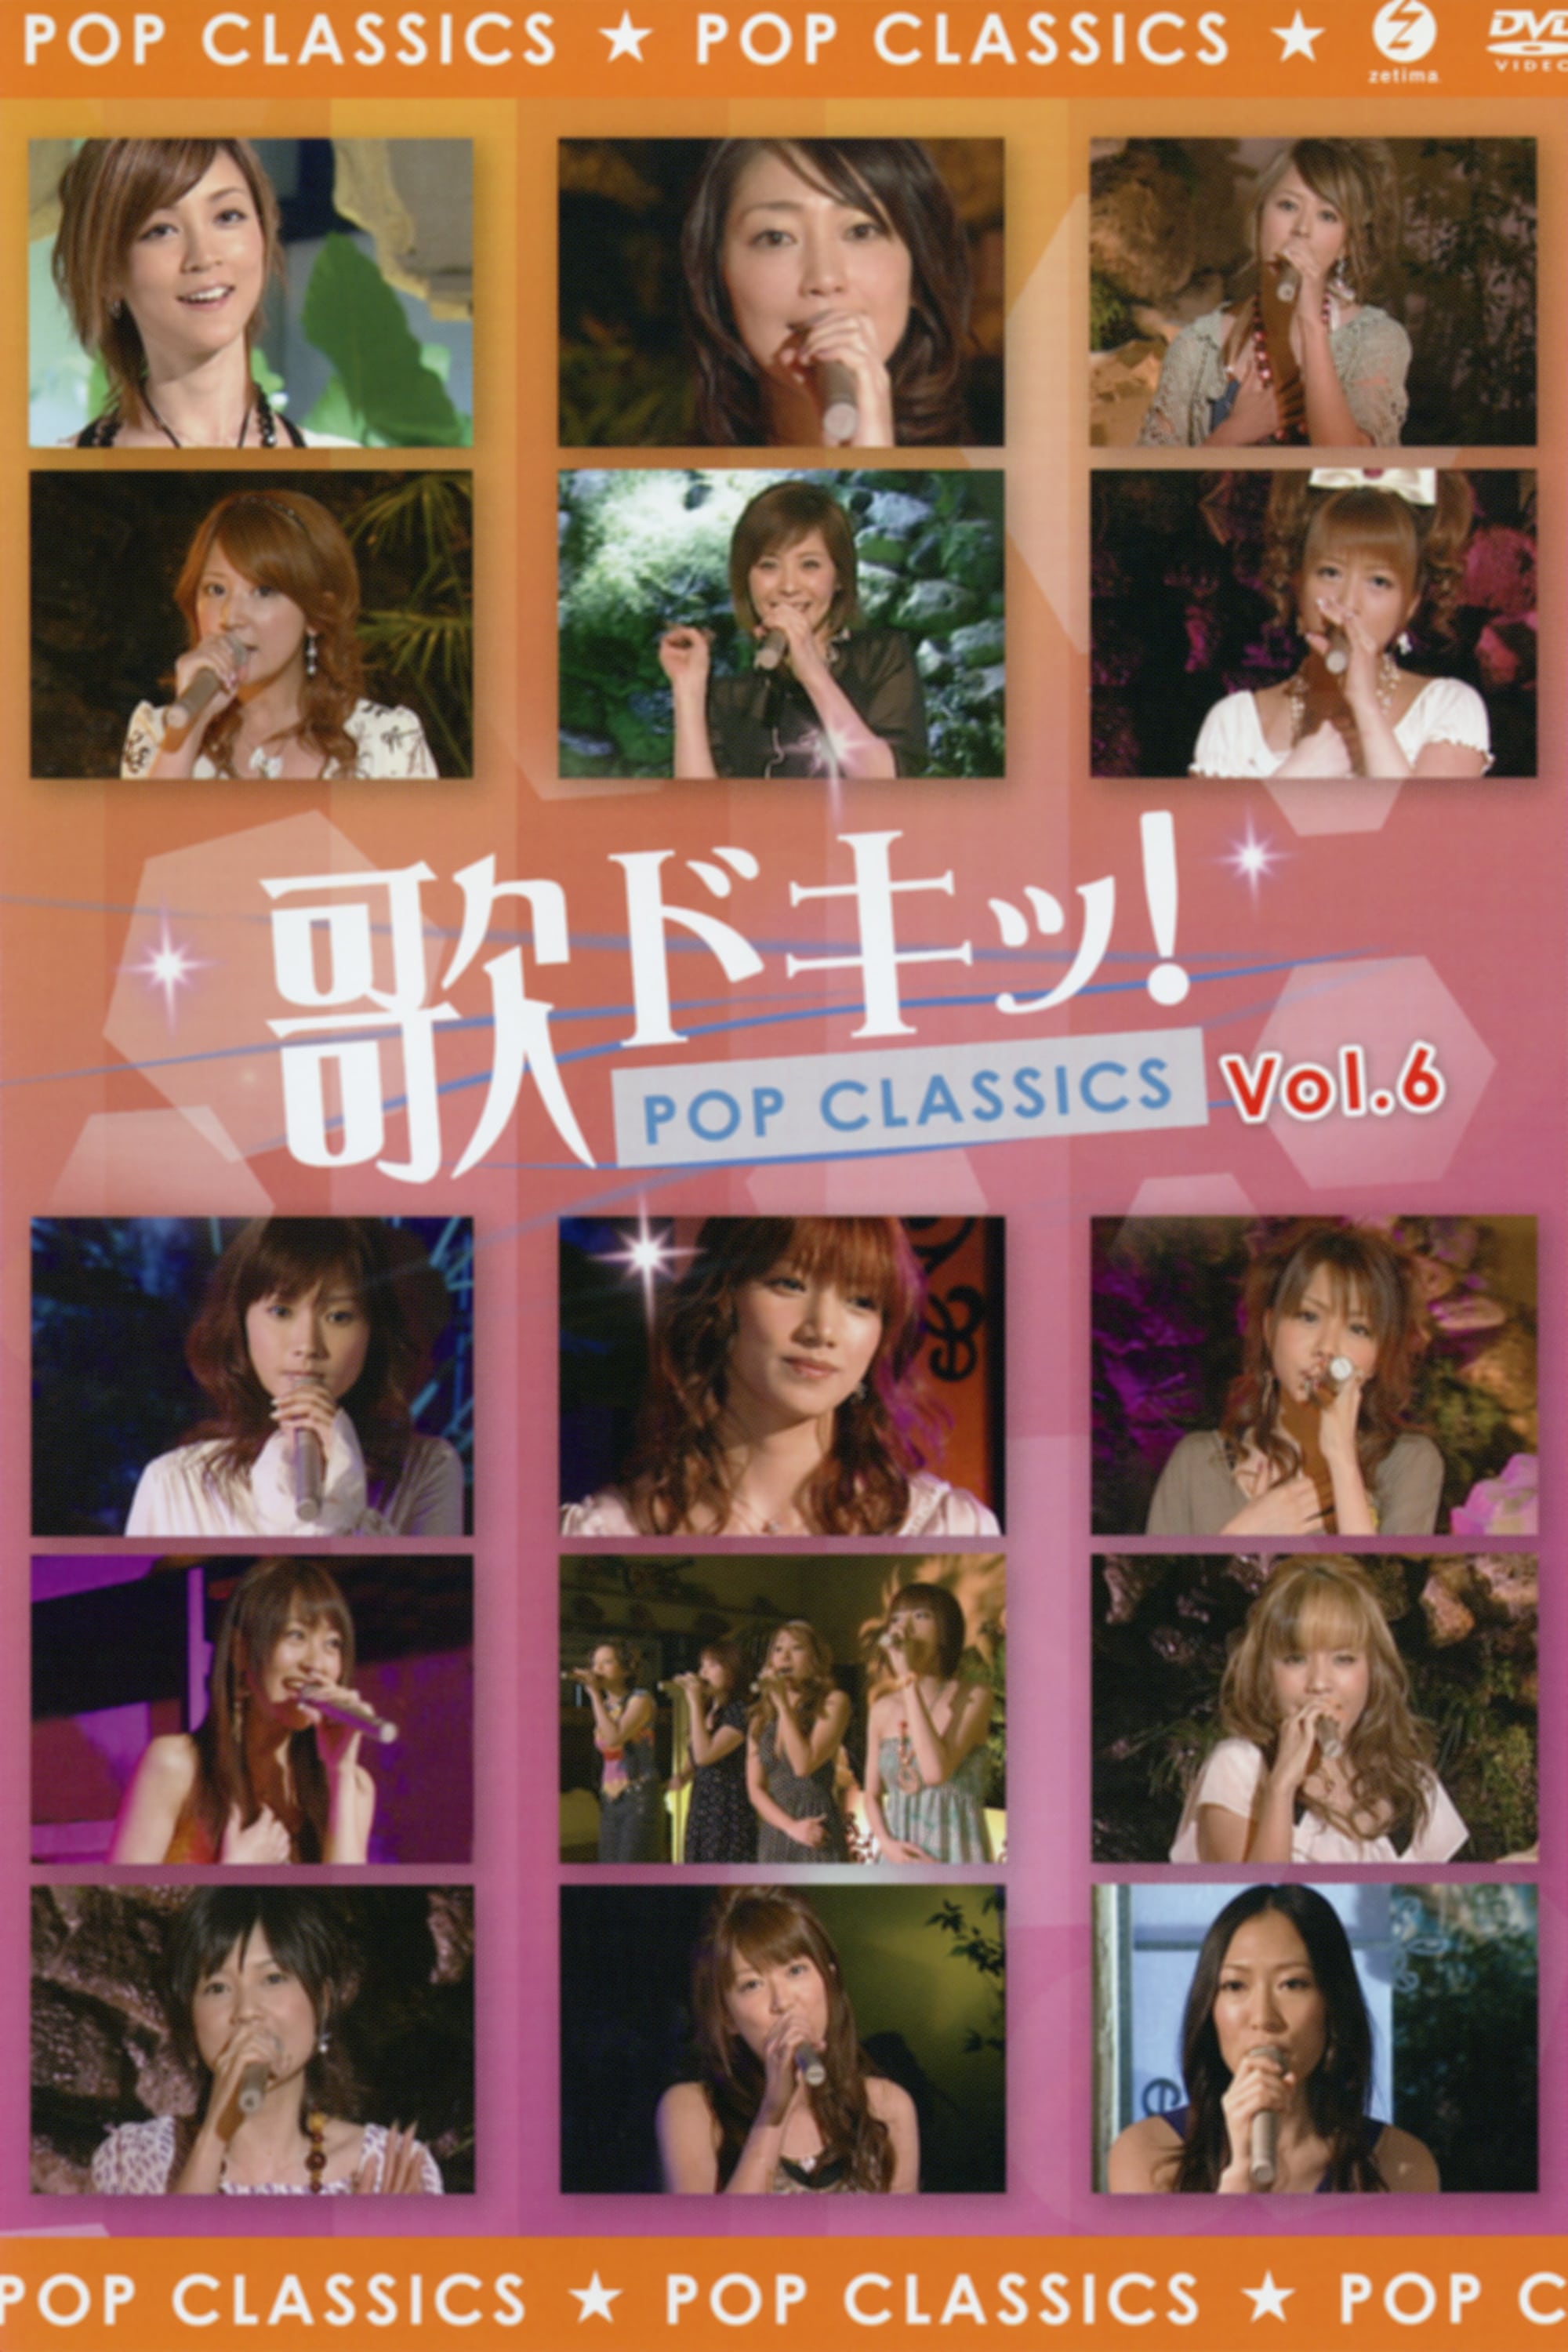 Uta Doki! Pop Classics Vol.6